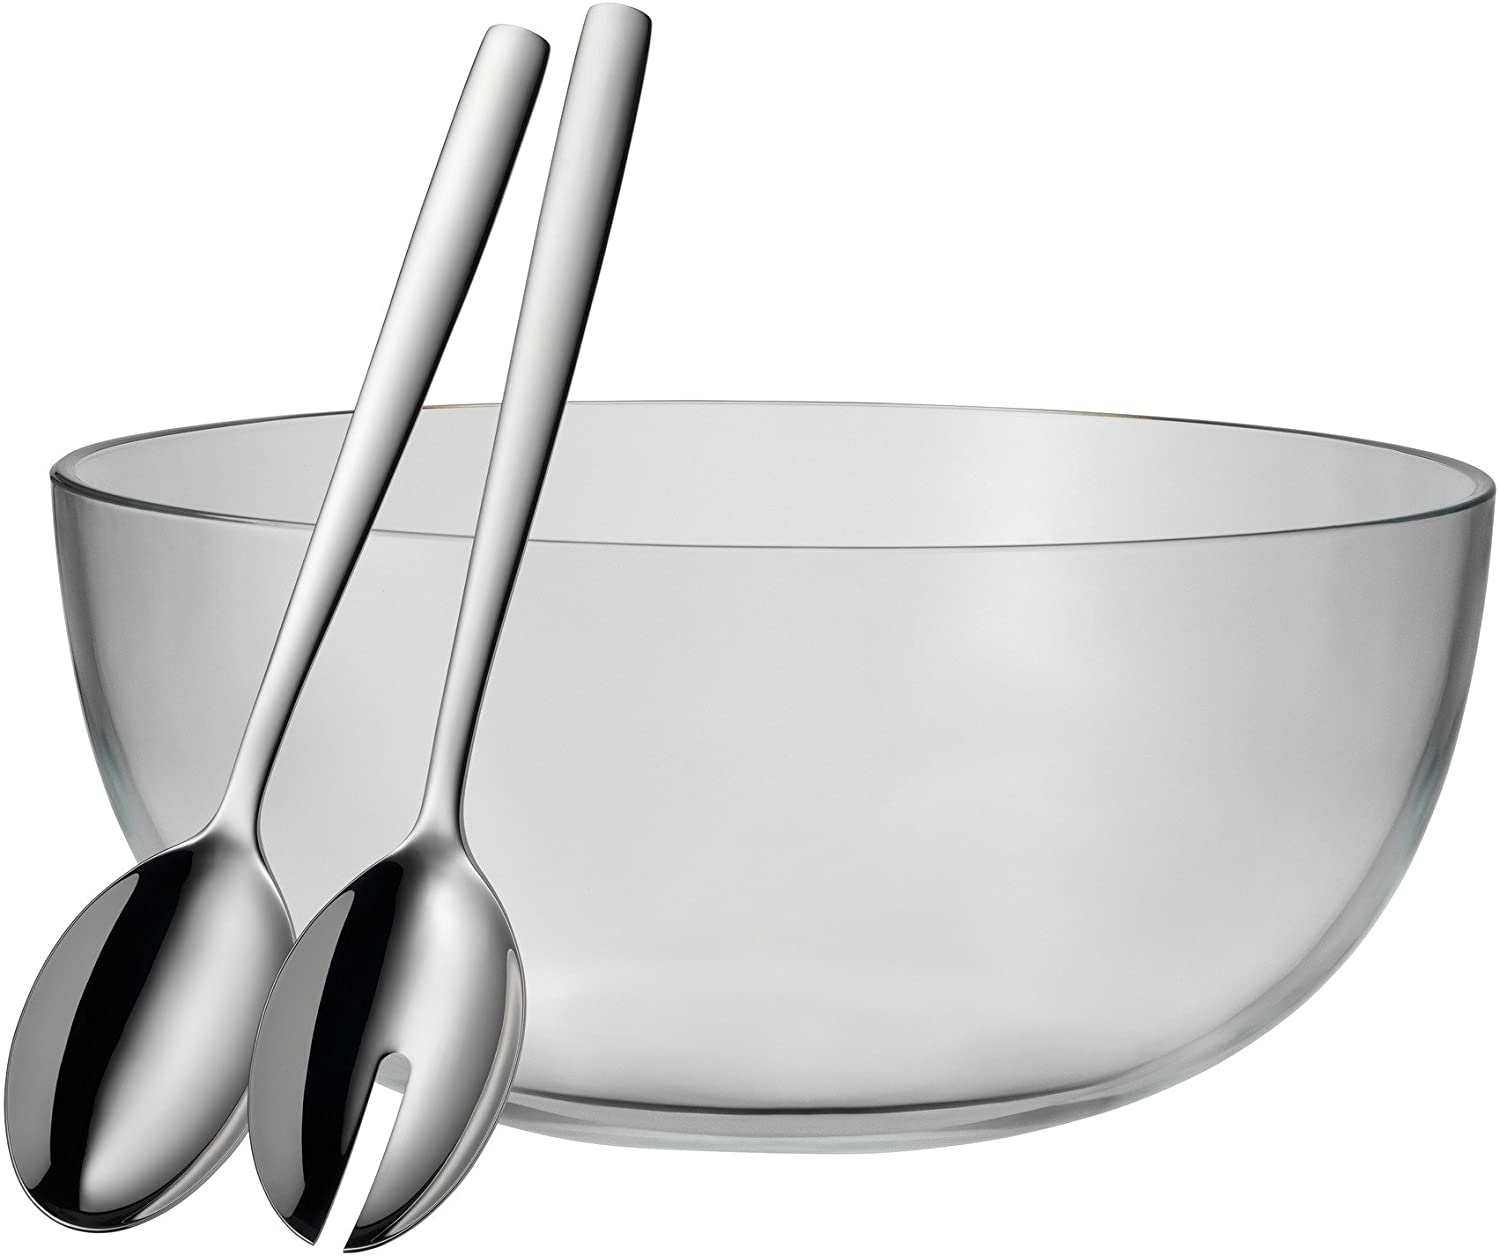 WMF Taverno 3-Piece Salad Bowl Set, Glass Bowl Diameter 23.5 cm, Salad Servers 25 cm, Glass, Stainless Steel, Cromargan, Rustproof, Dishwasher Safe, 43 x 30 x 30 cm